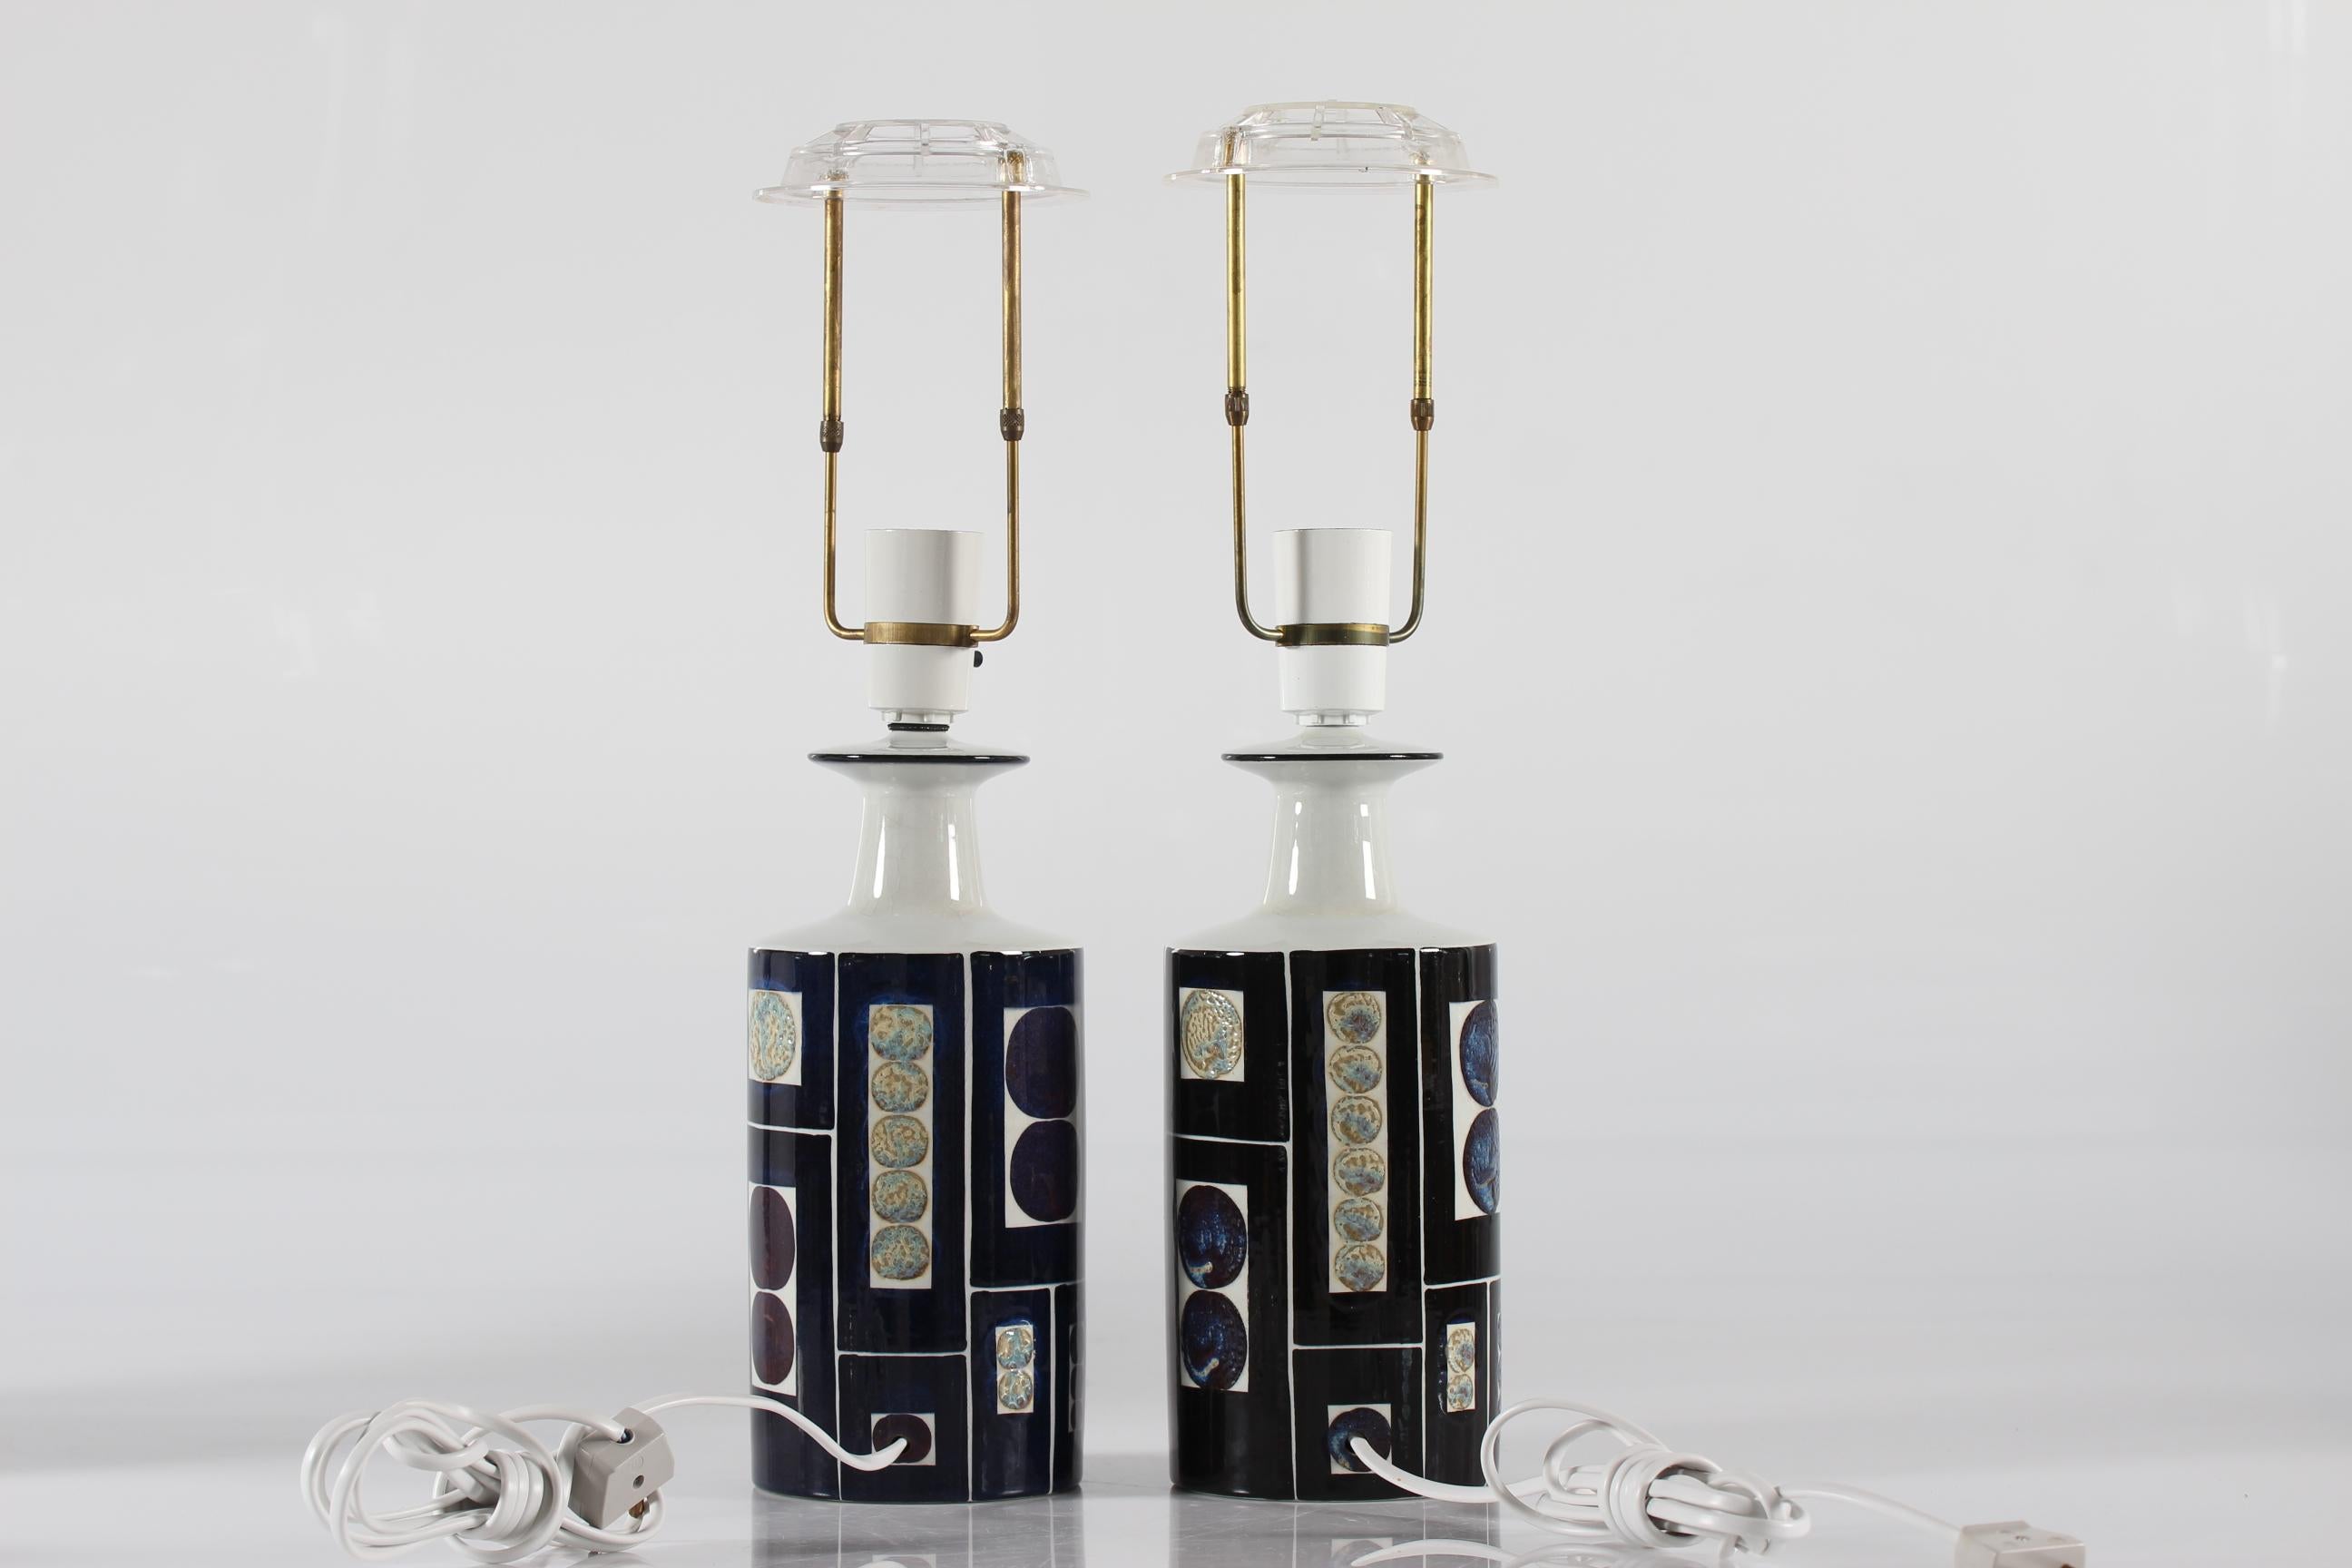 Pair of Royal Copenhagen Table Lamps by Inge-Lise Koefoed, Danish Ceramic, 1960s For Sale 3